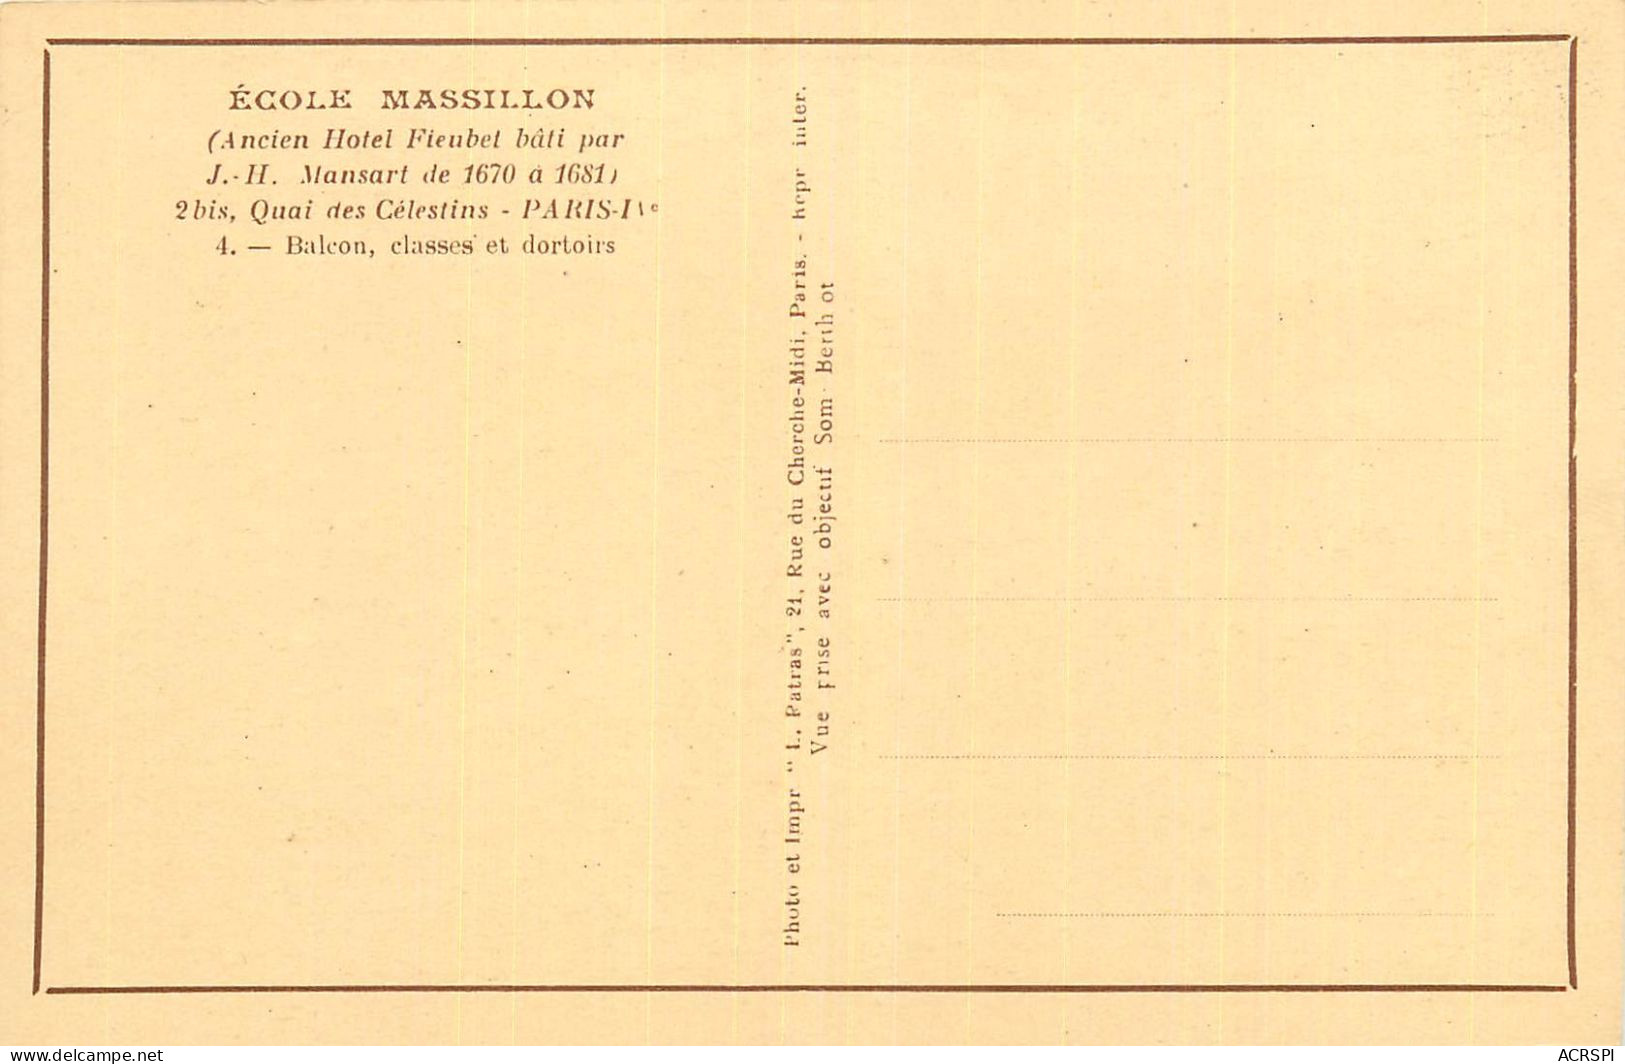 Paris, Ecole Massillon Lot de 30 cartes postales Foyer Gratry Vues diverses (scan r-v) KEVREN0149